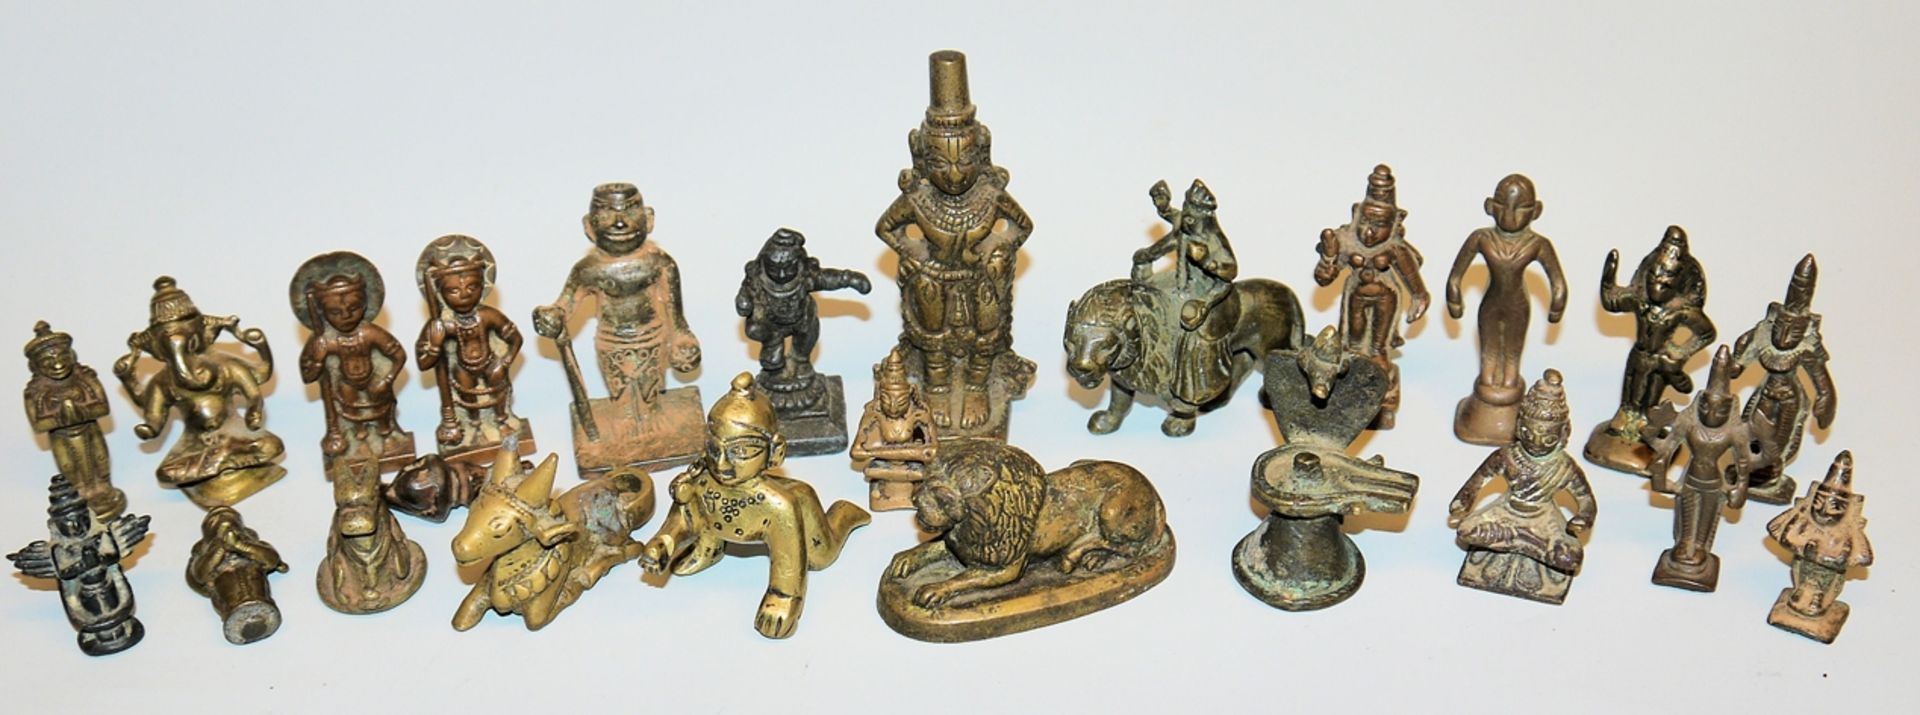 24 small and miniature bronzes of Hindu deities, India 18th & 19th century